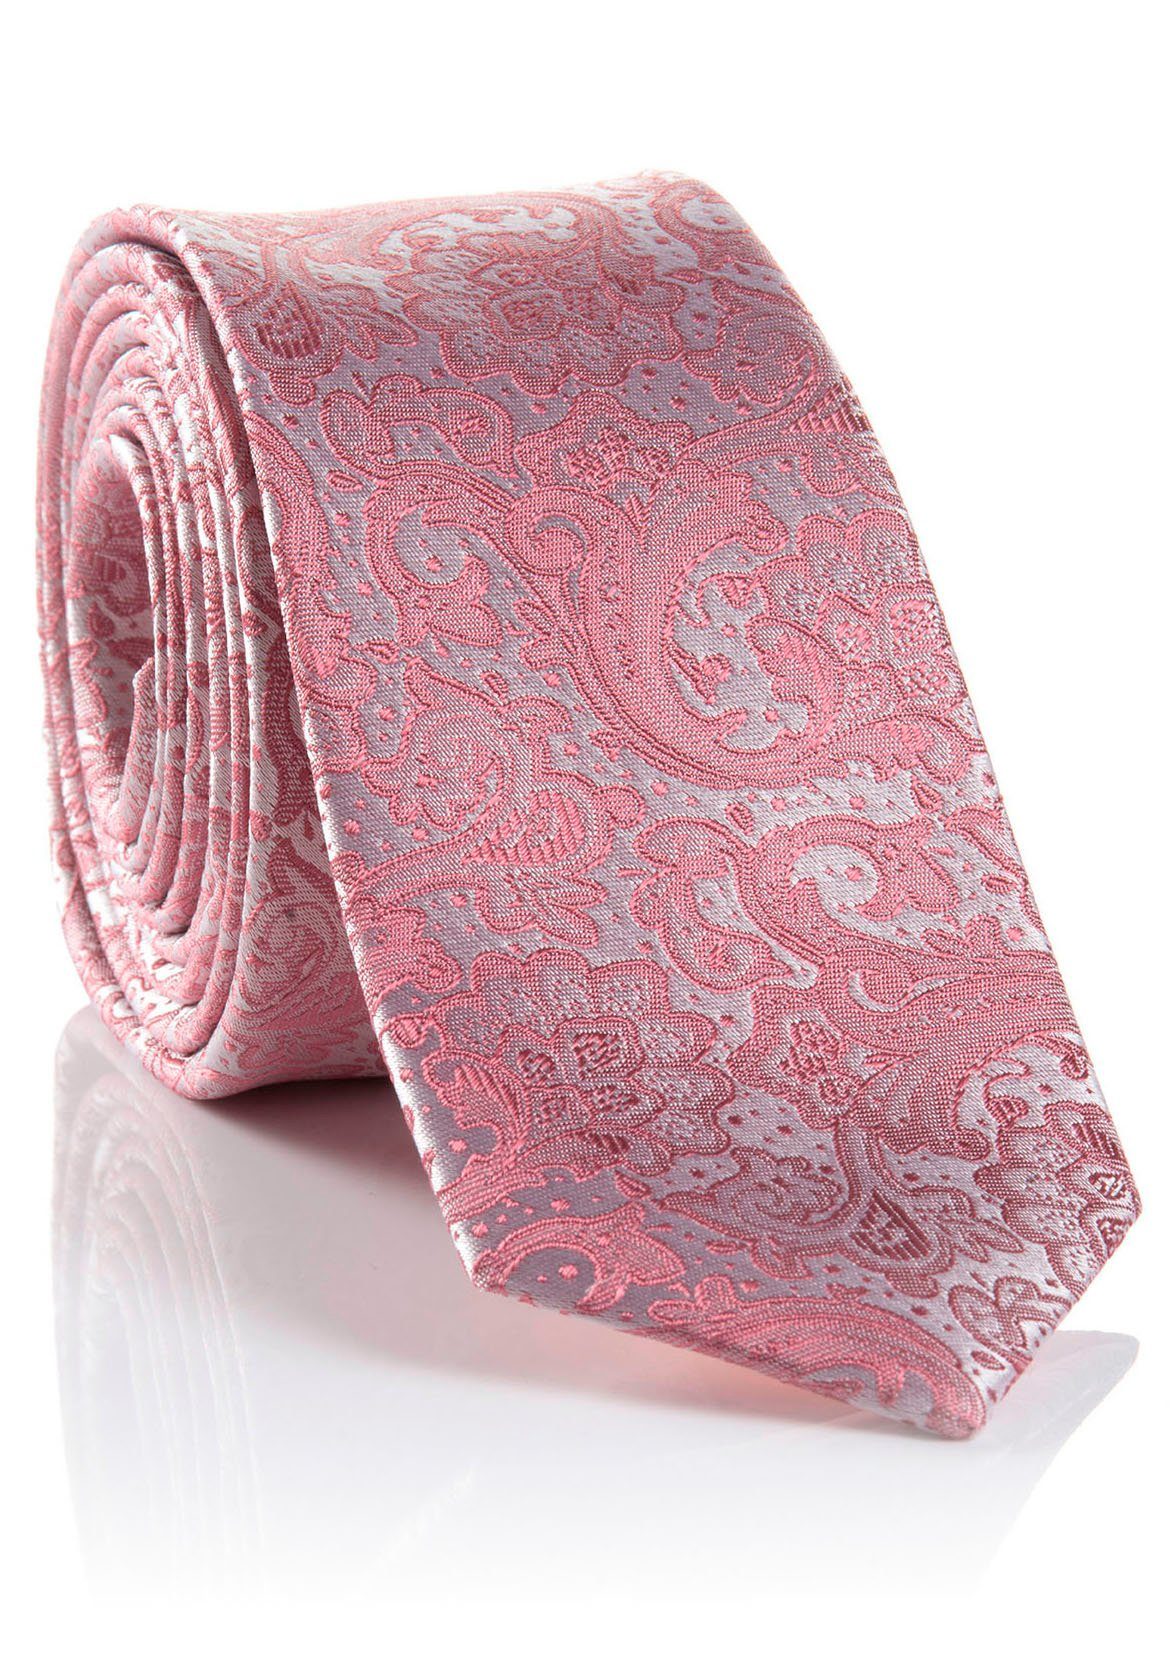 Seide, bright Krawatte LELIO aus MONTI Krawatte Paisley-Muster reiner red